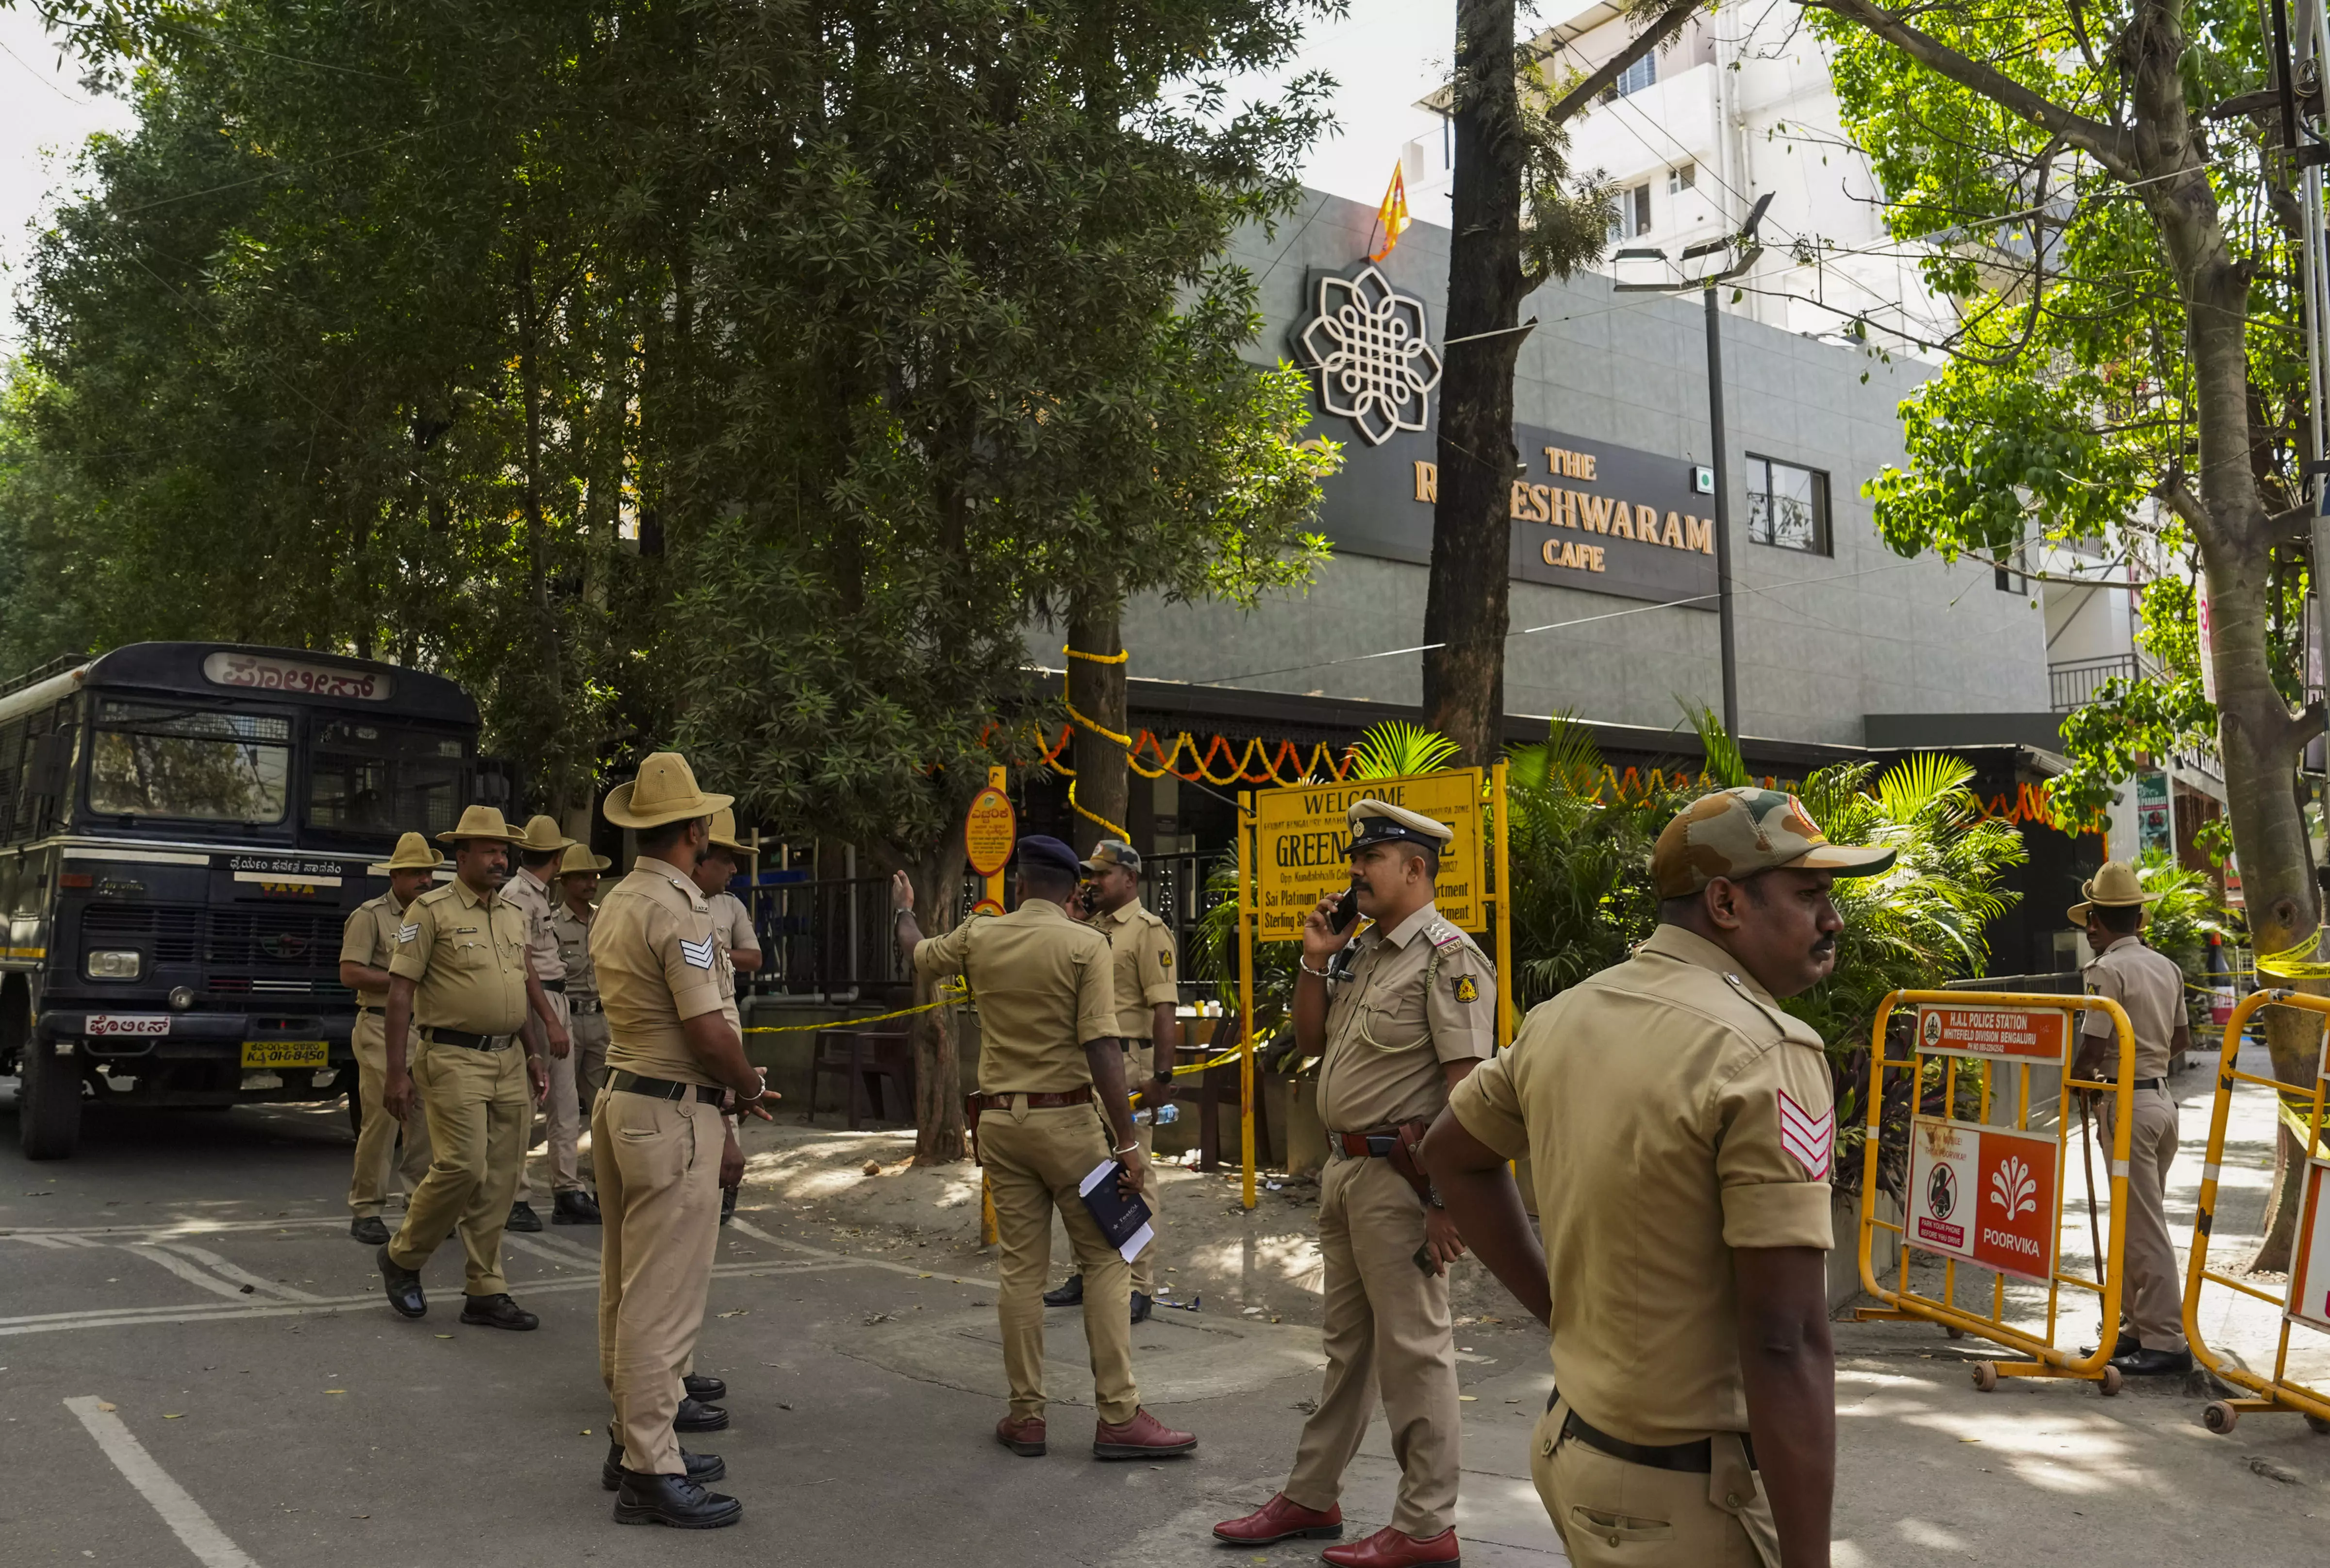 Rameshwaram Cafe blast: NIA, CCB detain cloth merchant, a member of banned PFI